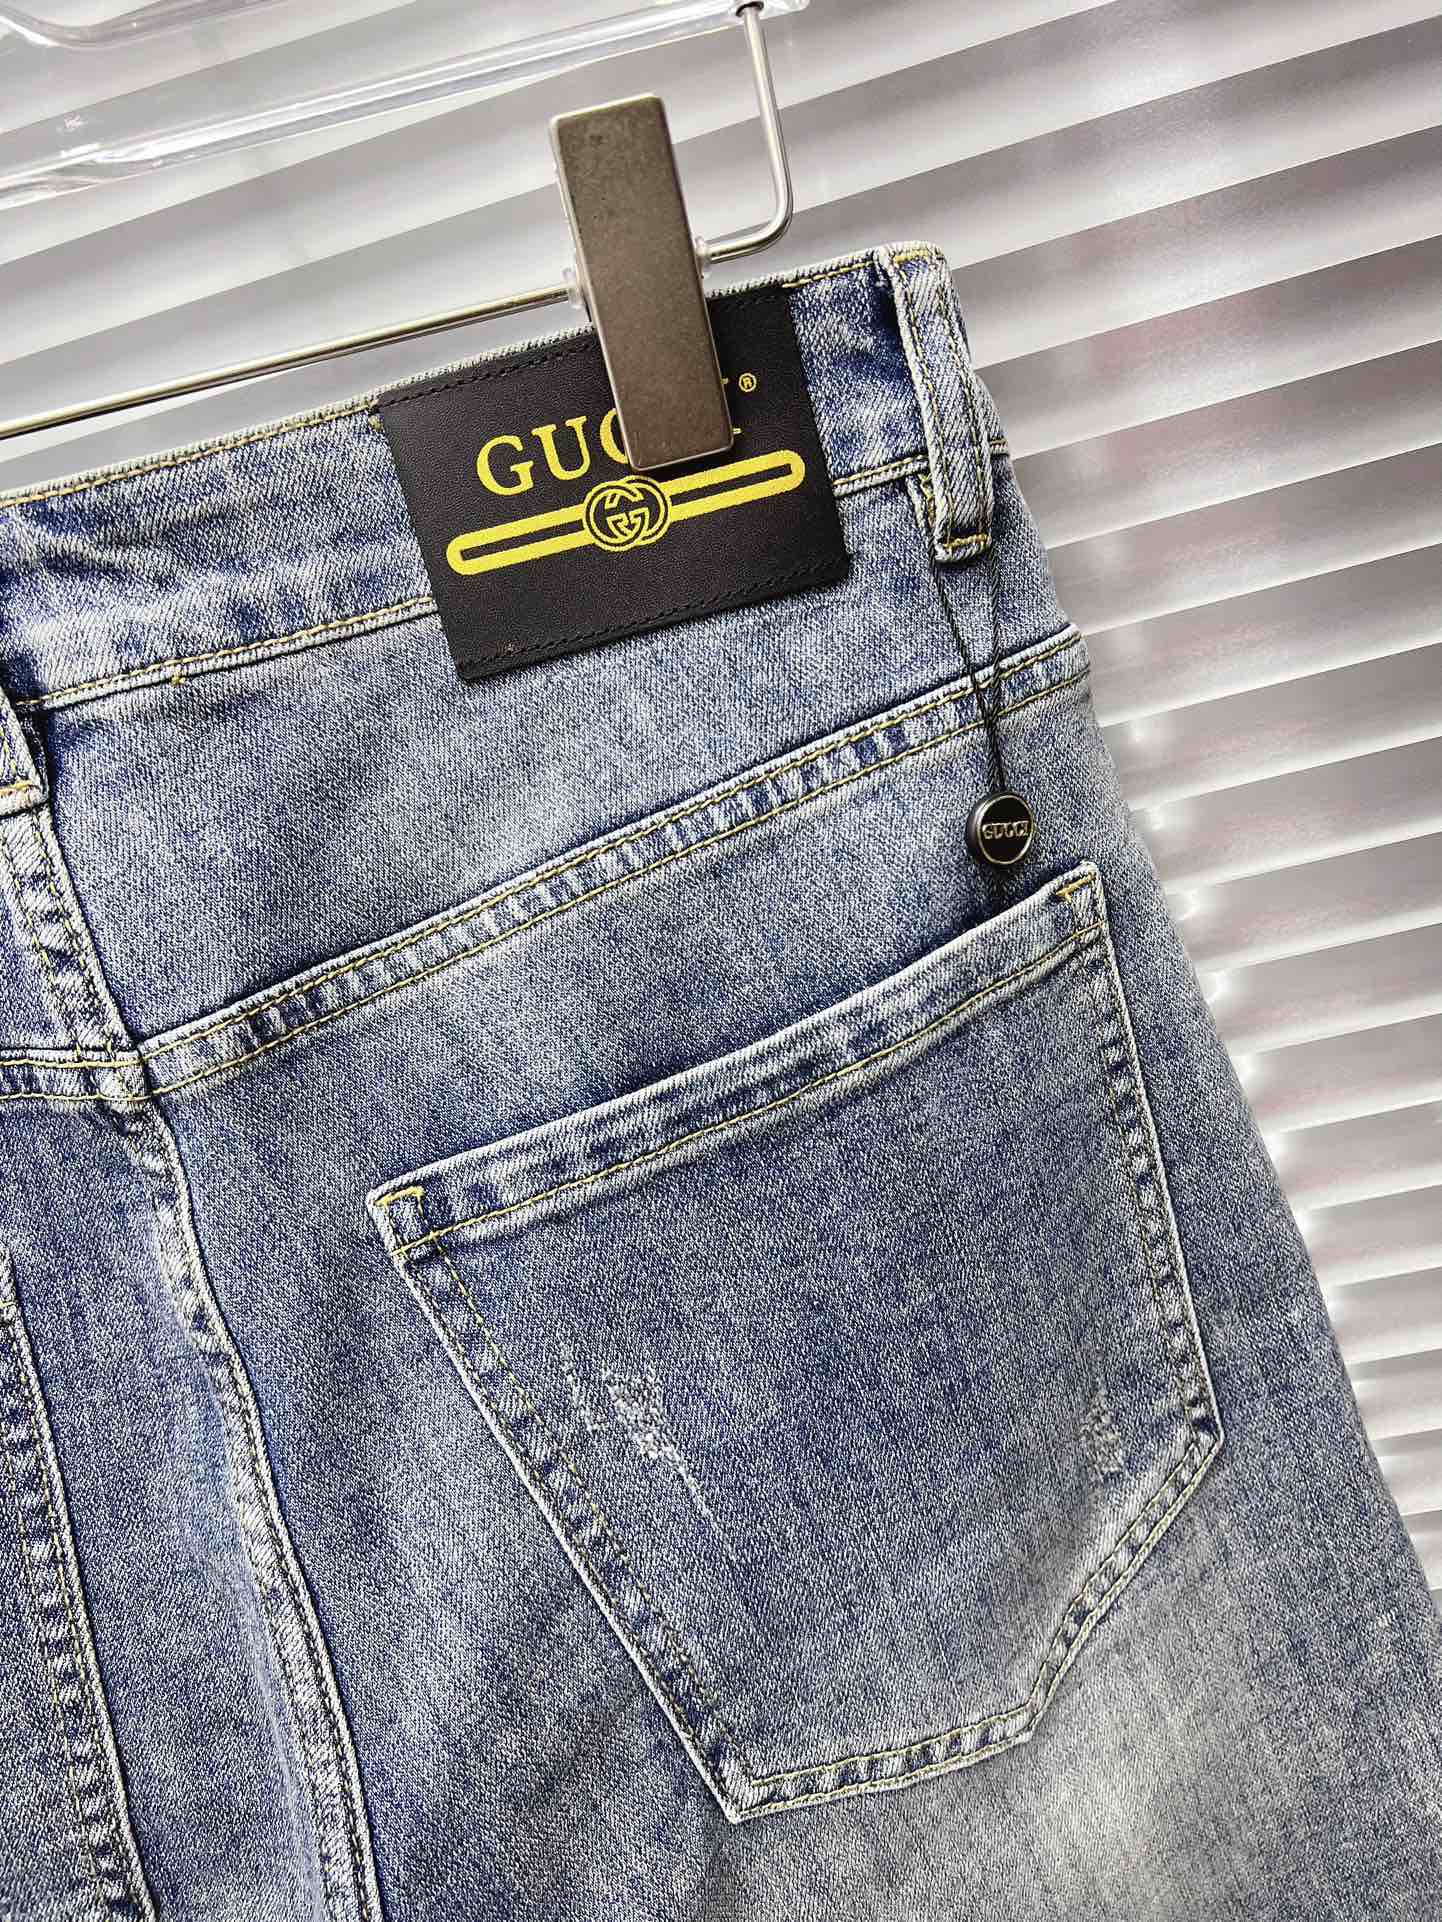 Gucc*古驰新款牛仔裤最新爆款通勤百搭无论什么场合穿都一样奢华高端上档次款式设计最一流选用进口原色丹宁